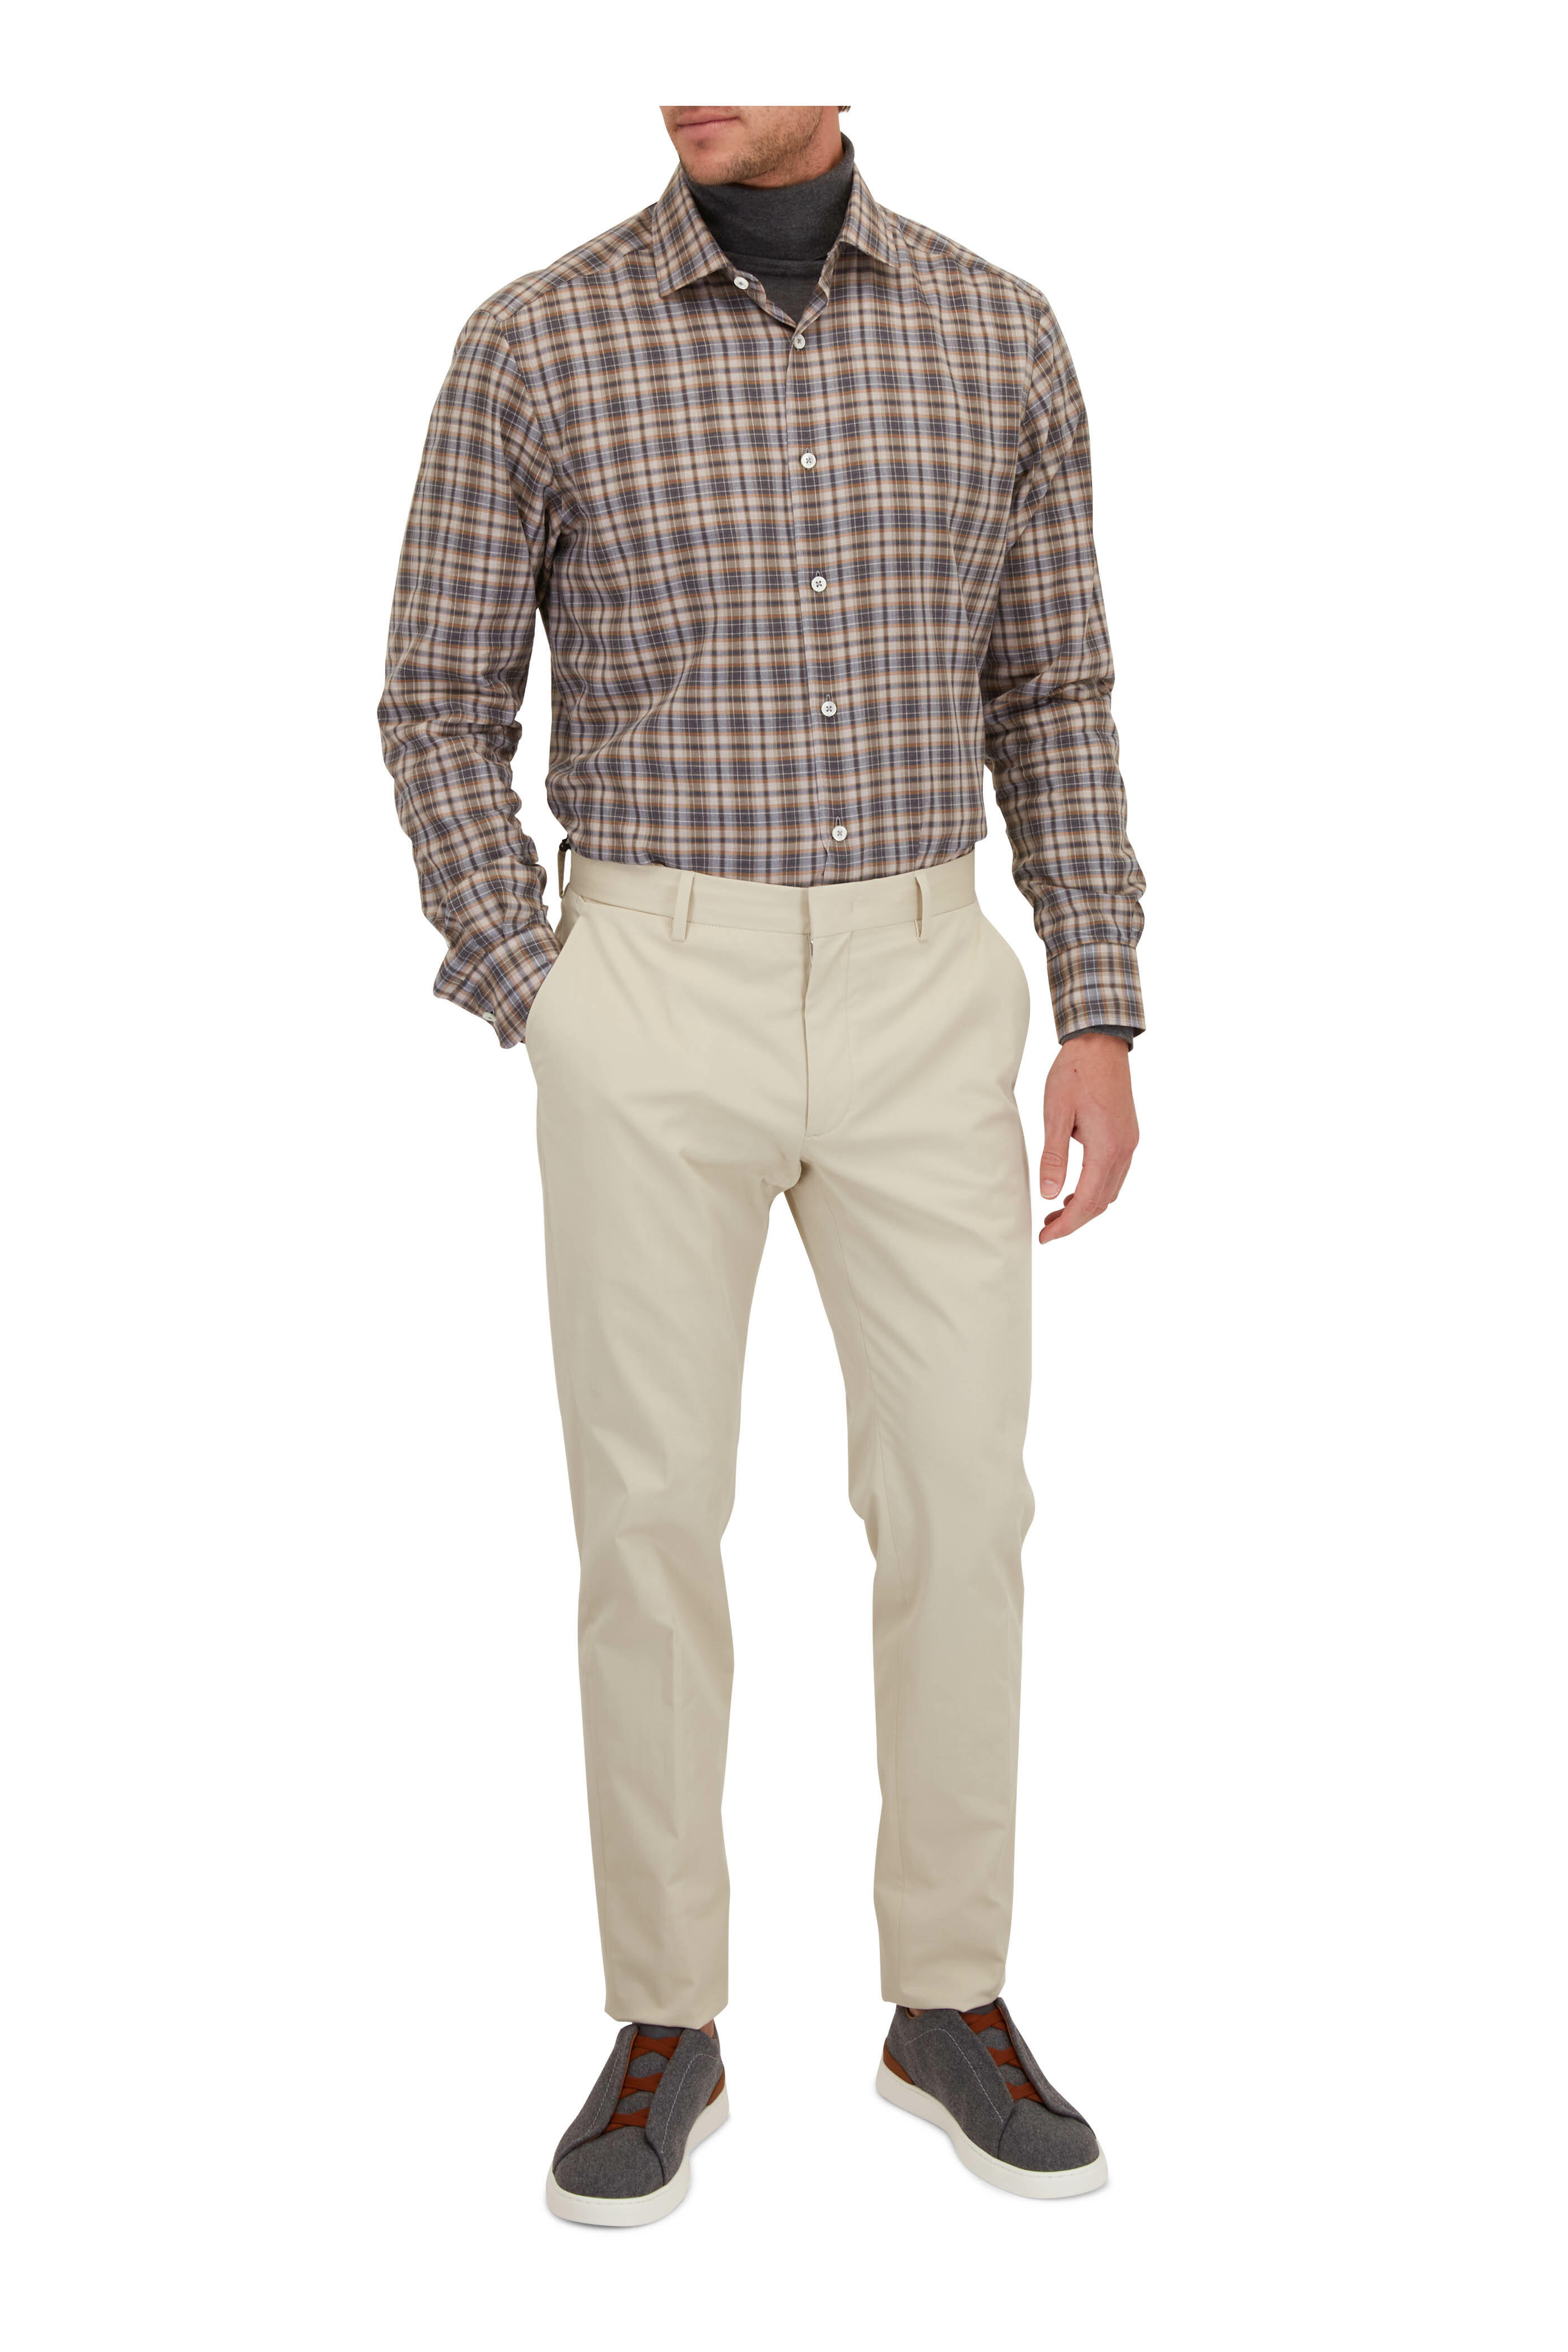 Zegna - Tan & Charcoal Plaid Cotton Sport Shirt | Mitchell Stores